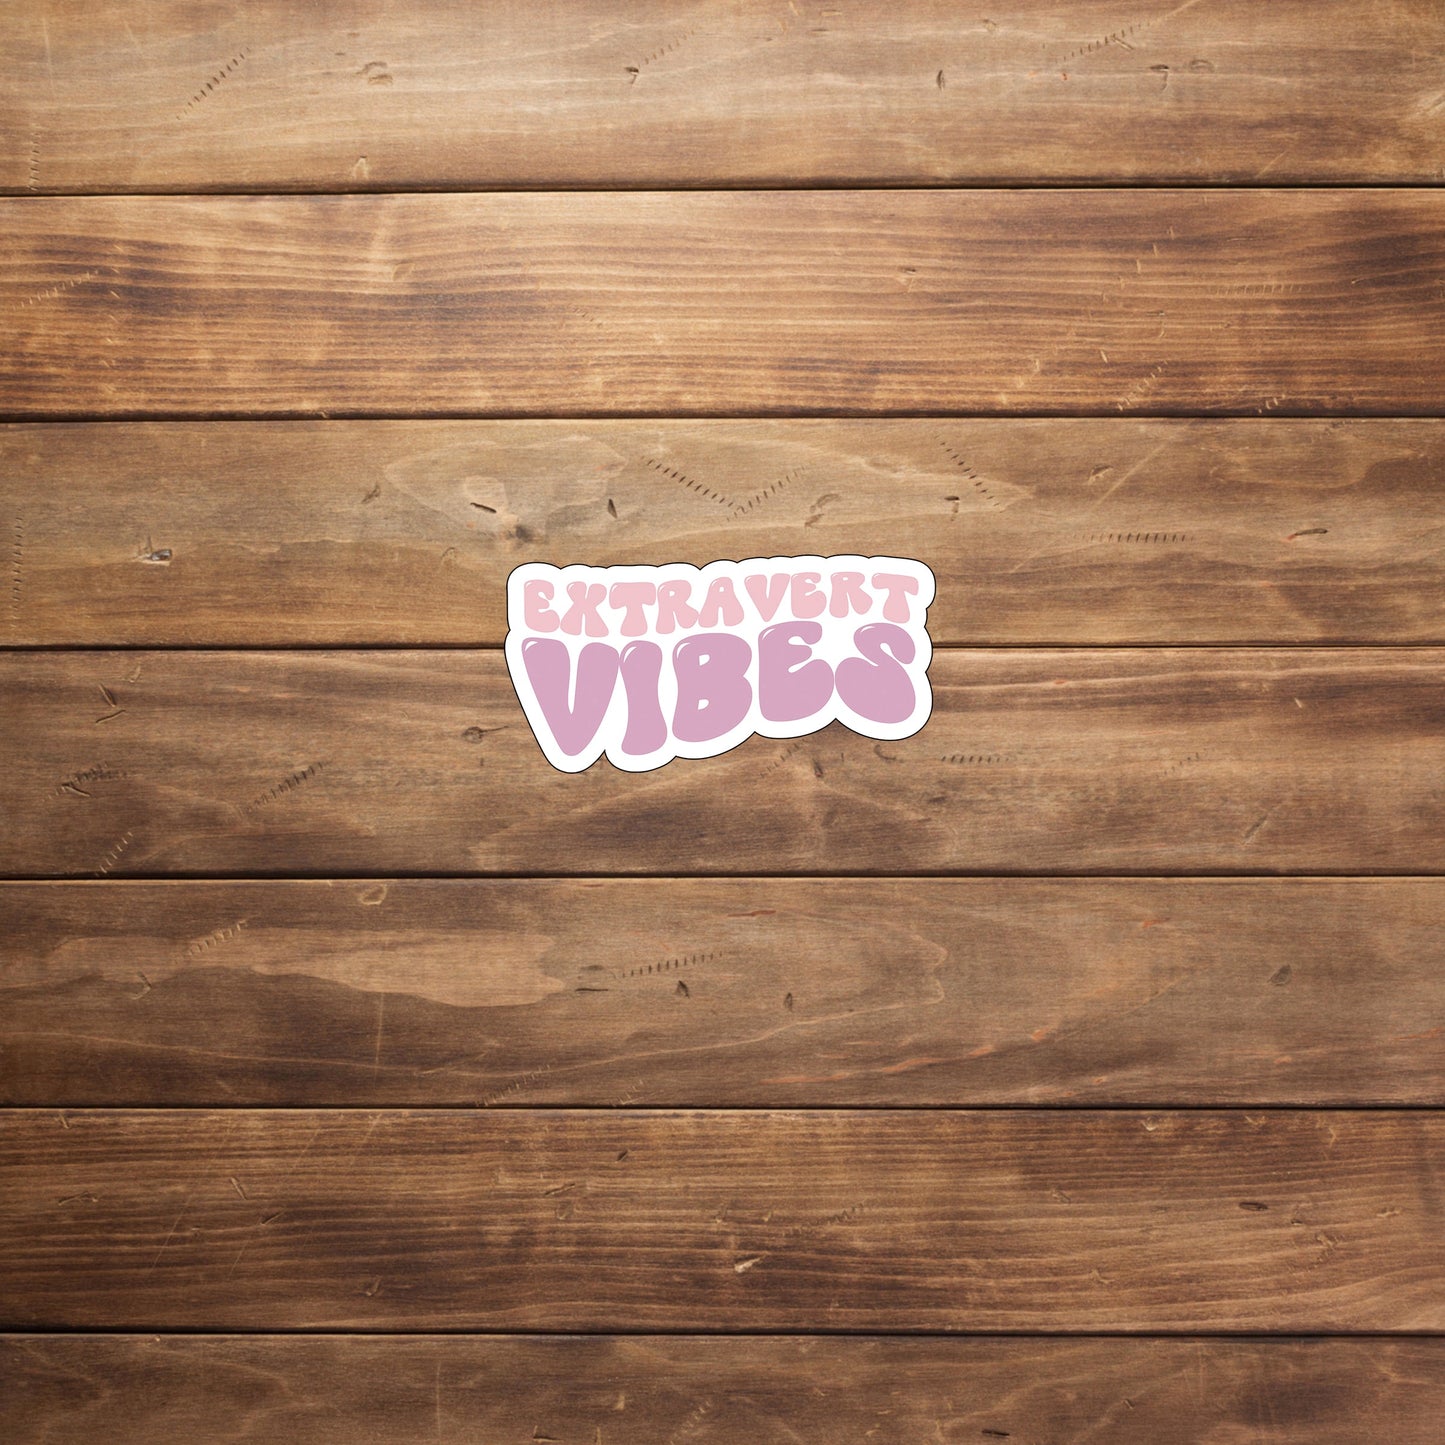 Extravert vibes  Sticker,  Vinyl sticker, laptop sticker, Tablet sticker